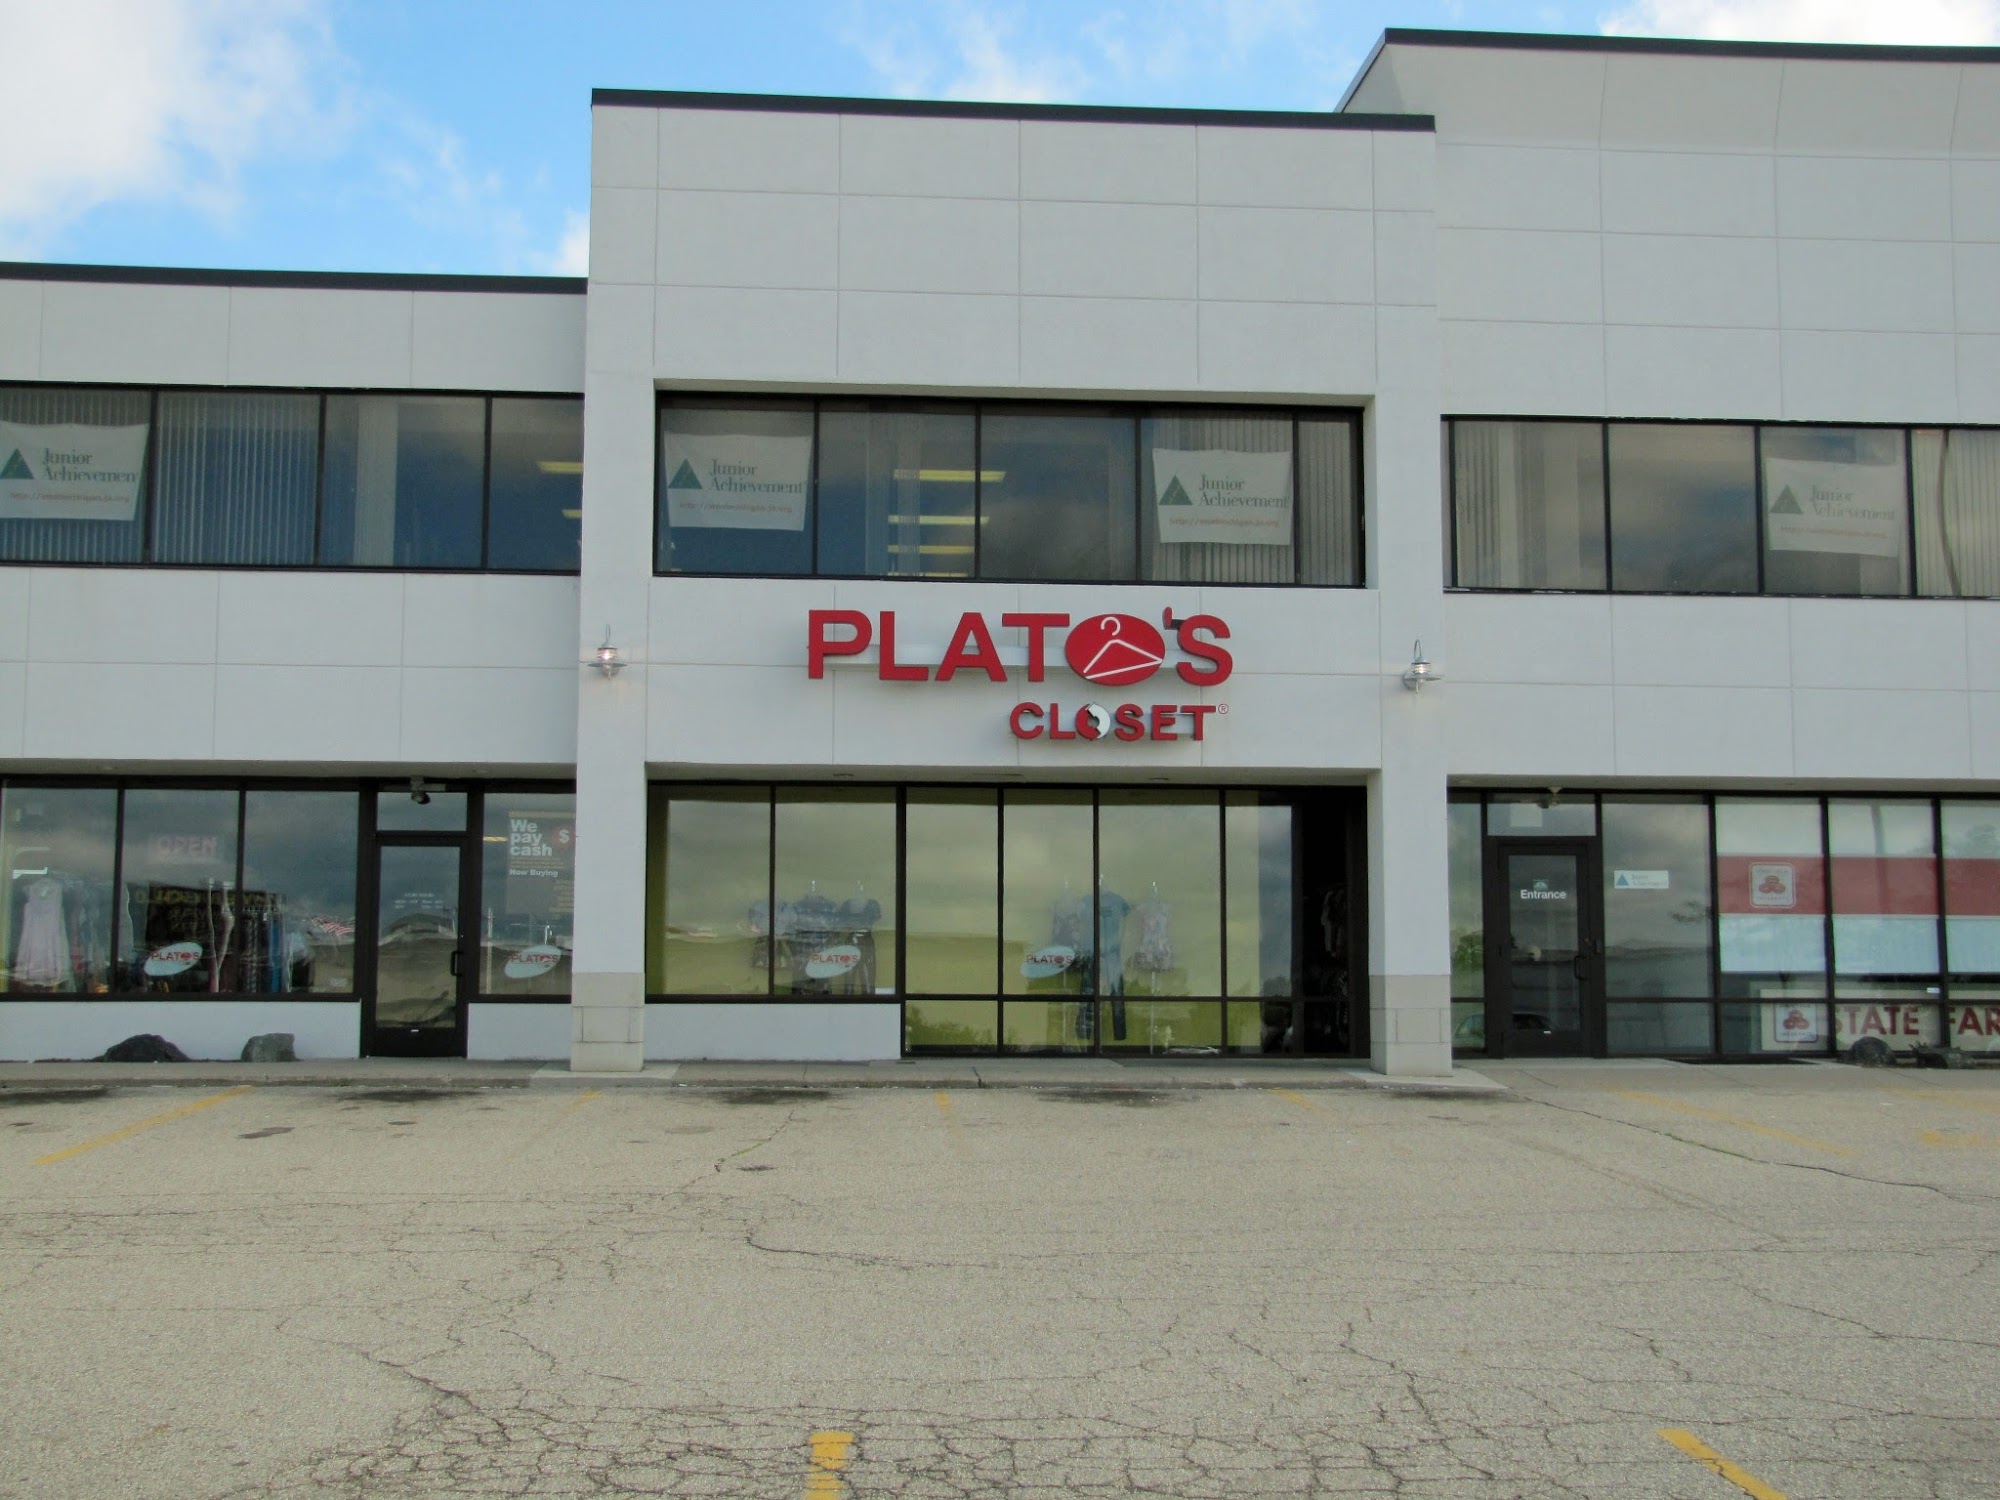 Plato's Closet Grand Rapids, MI